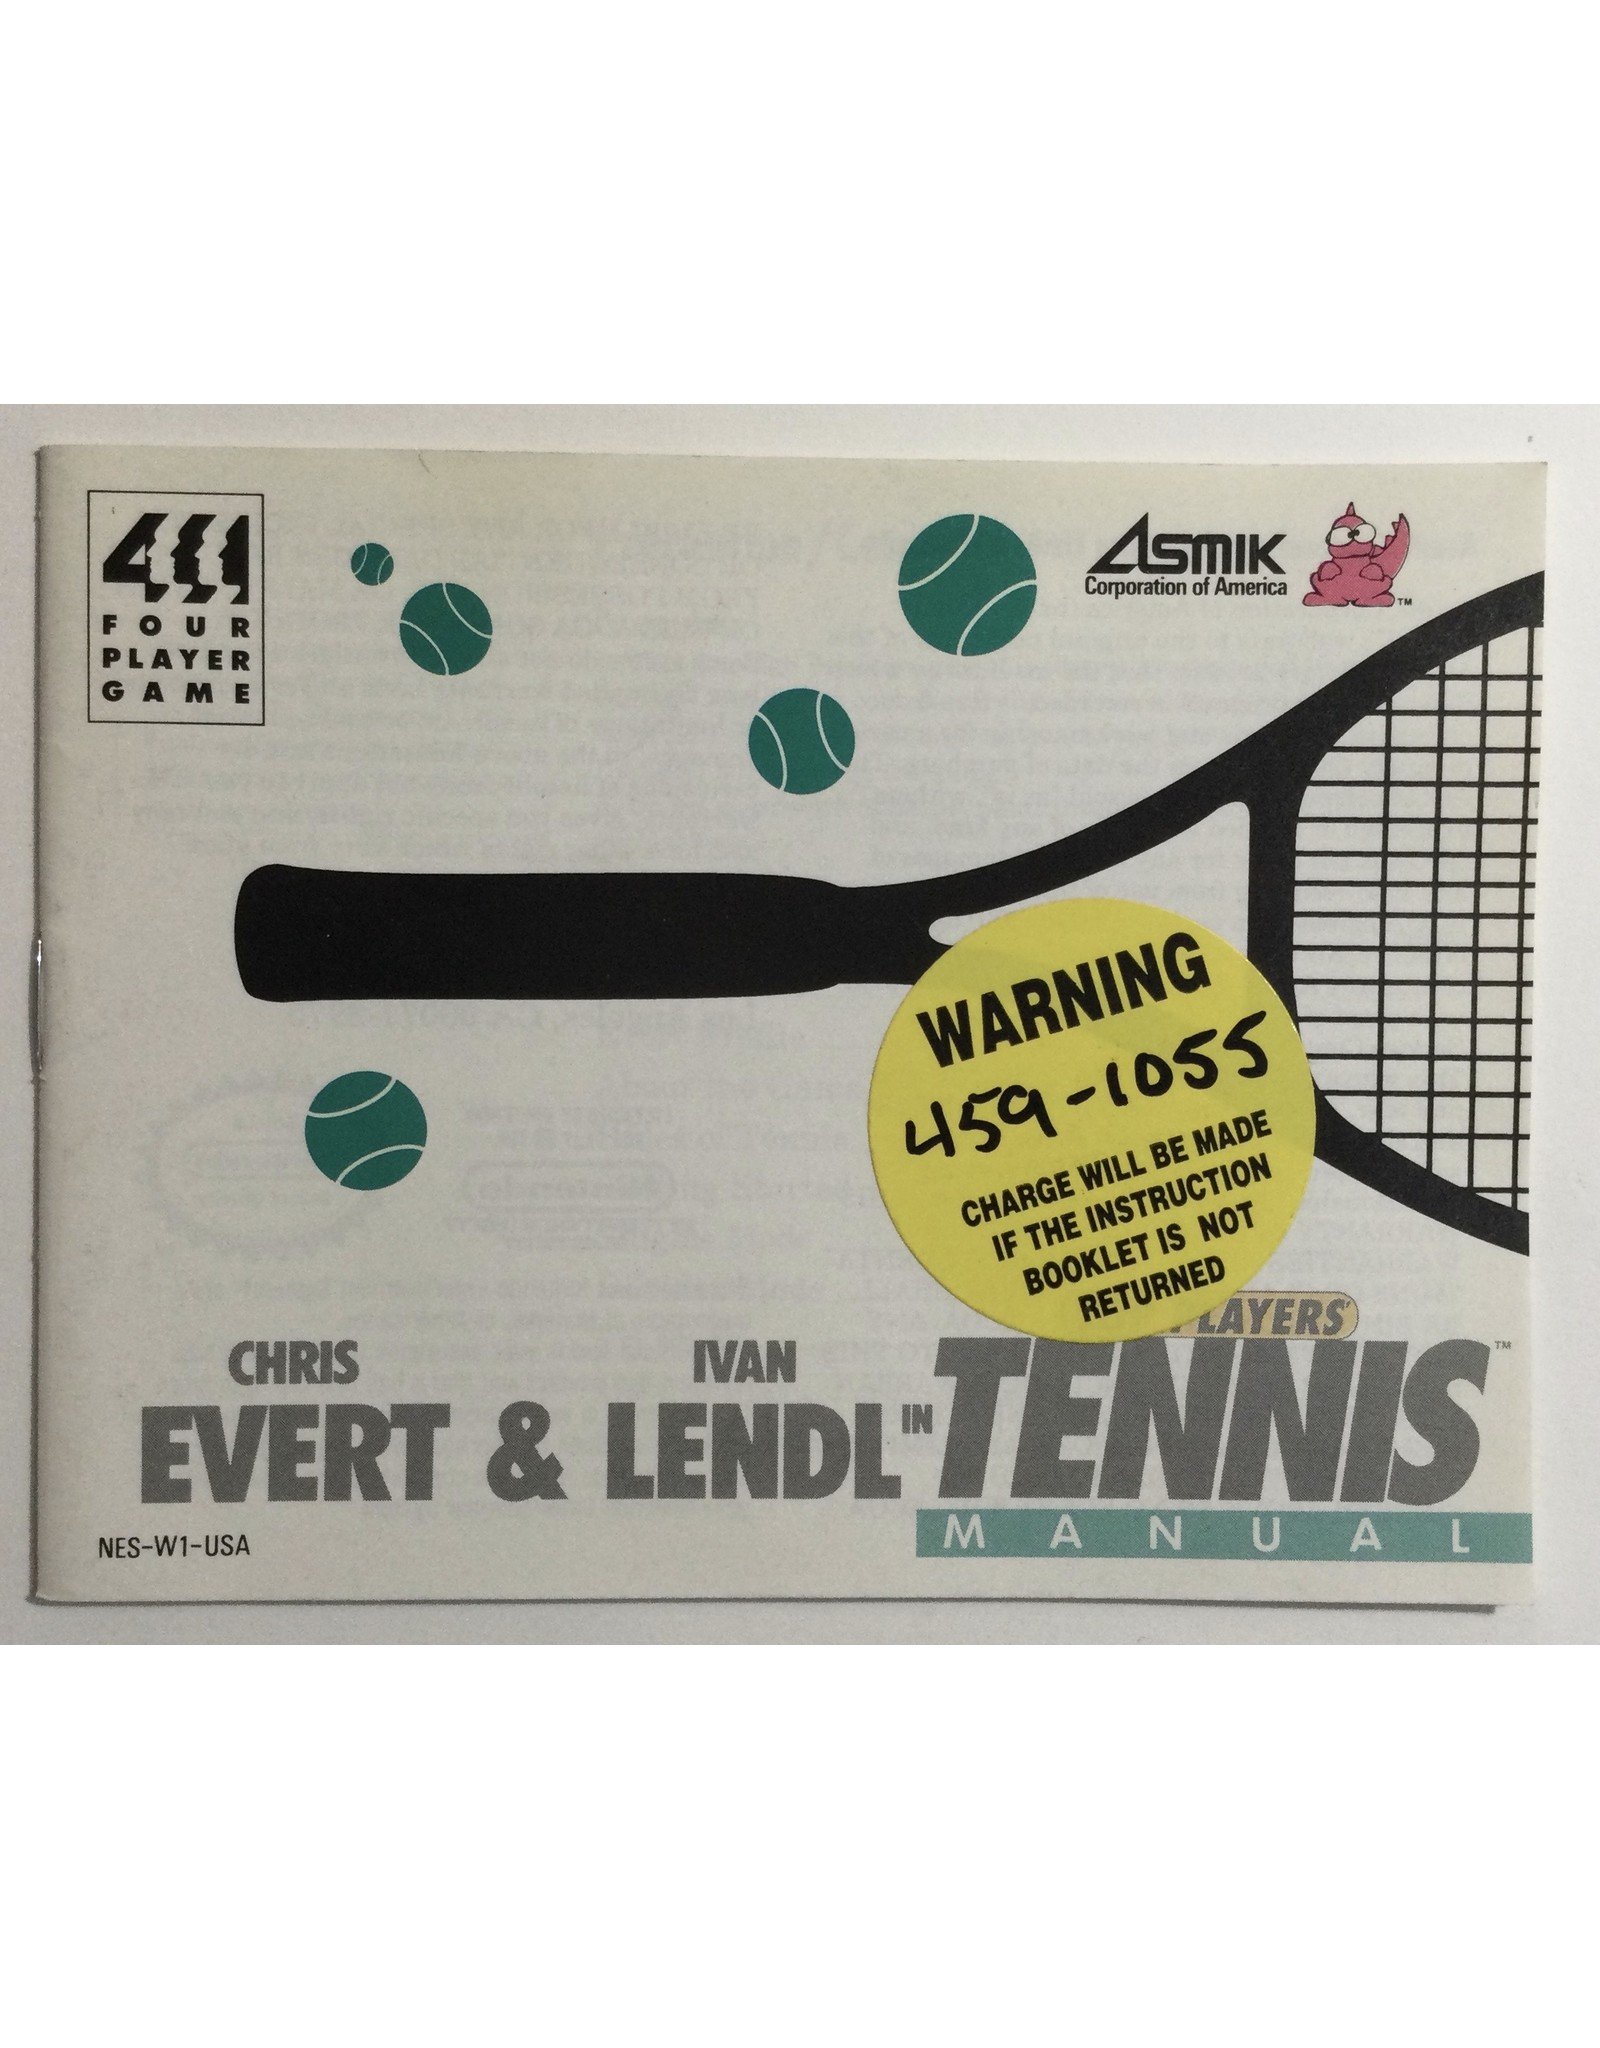 ASMIK Corporation of America Chris Evert & Lendl in Tennis for Nintendo Entertainment system (NES) - CIB